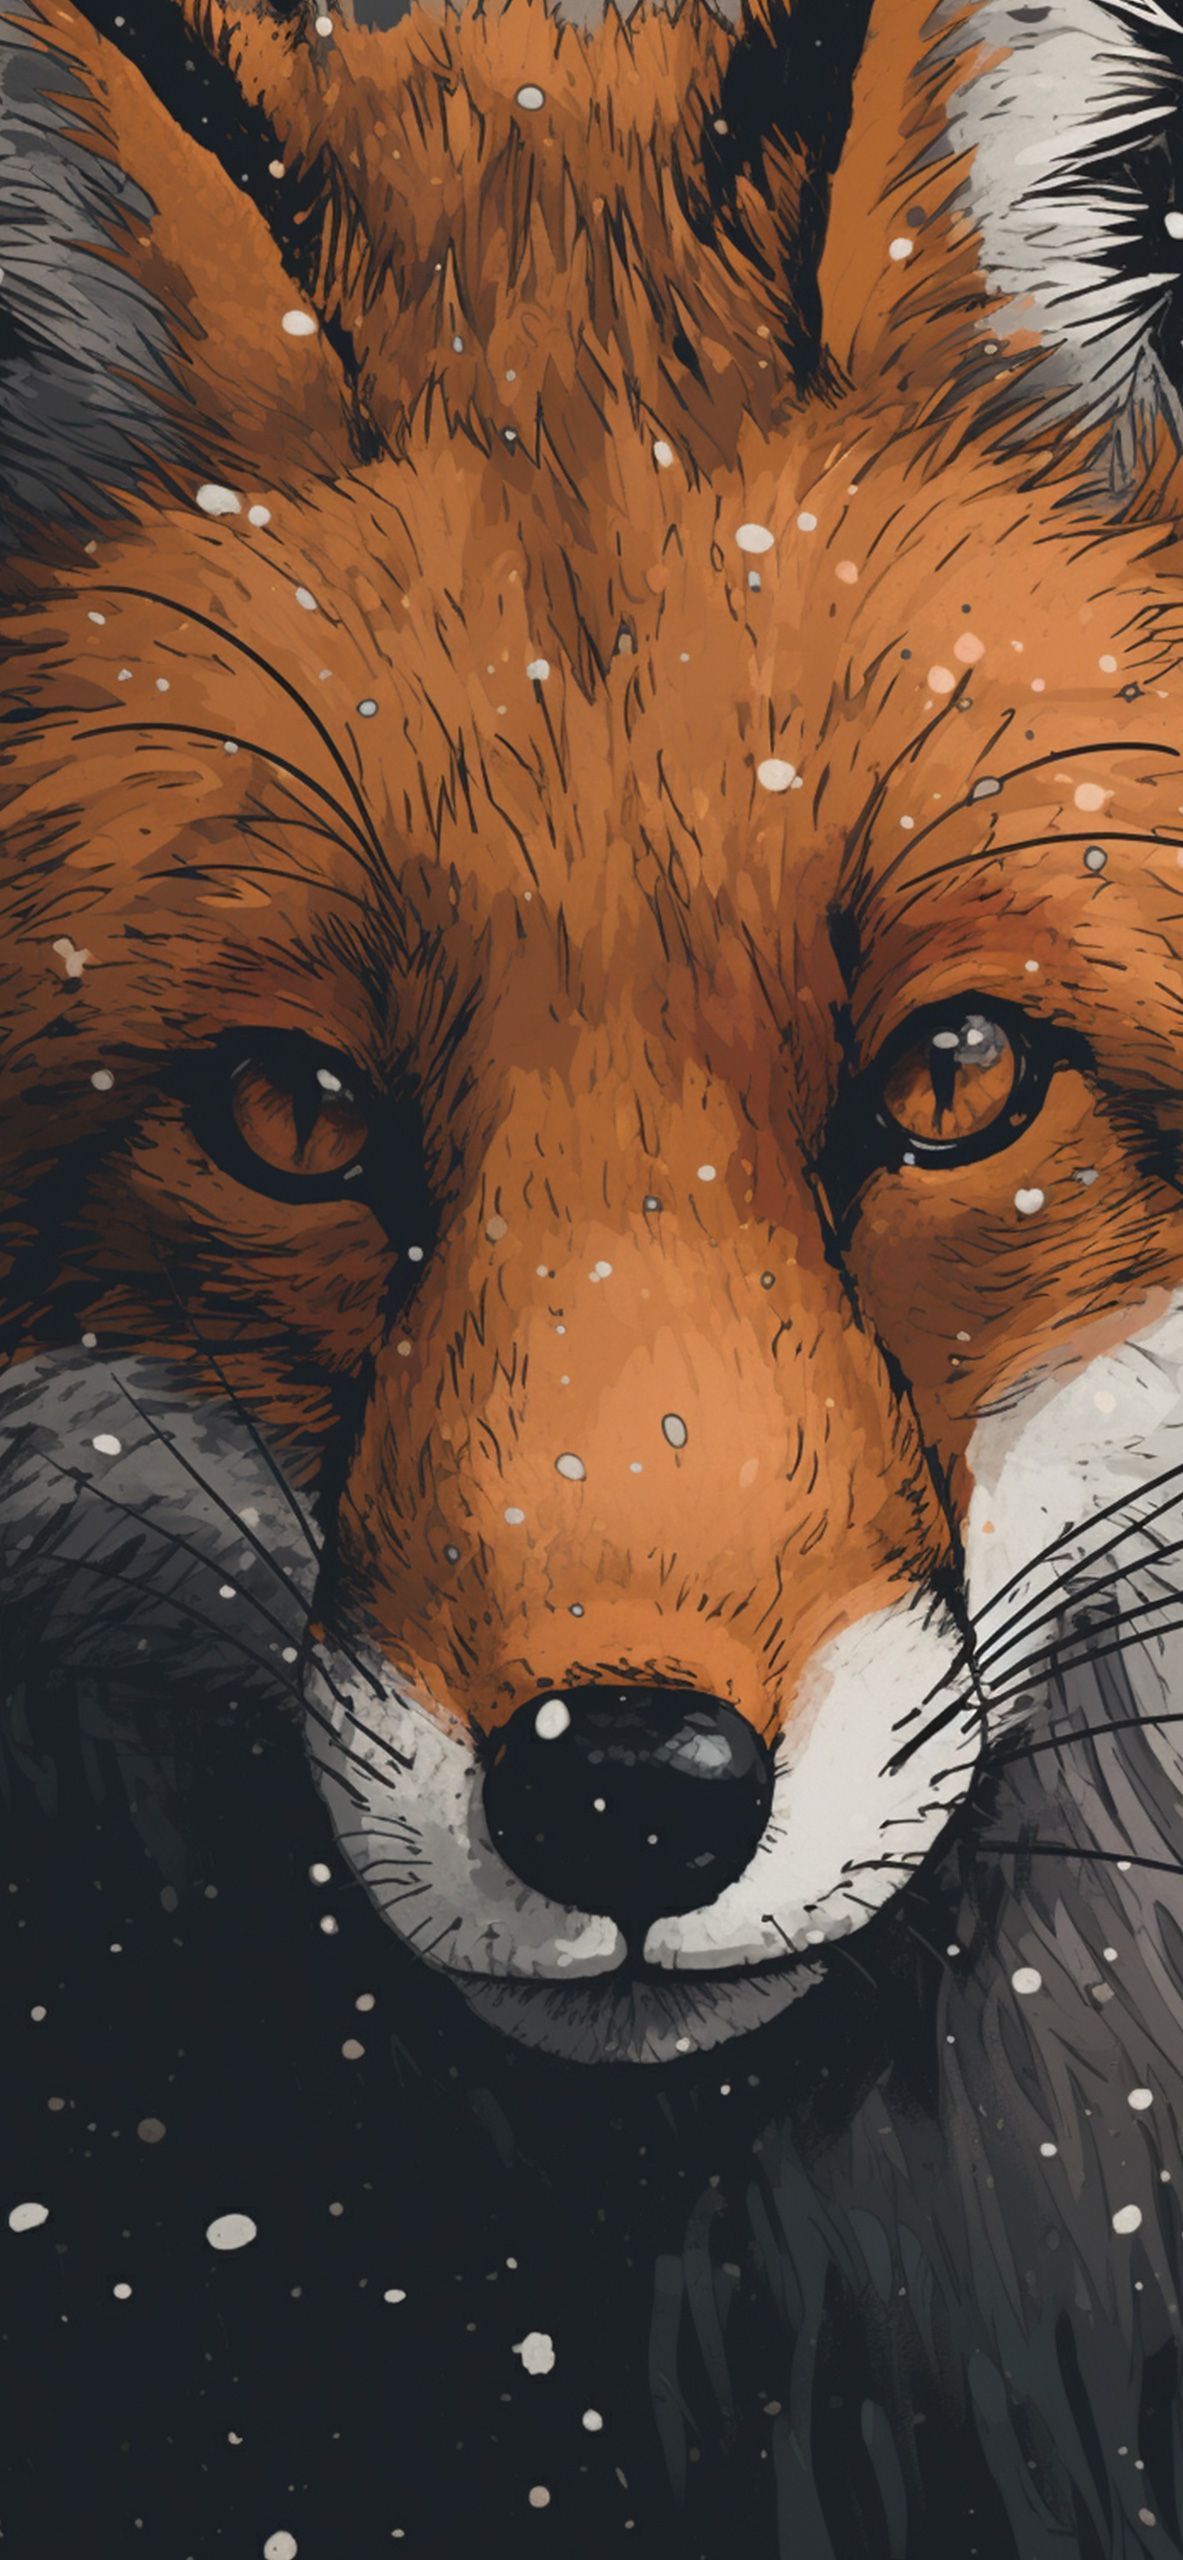 Fox & Snow Art Wallpaper Aesthetic Wallpaper for iPhone. Fox art, Snow art, Fox artwork